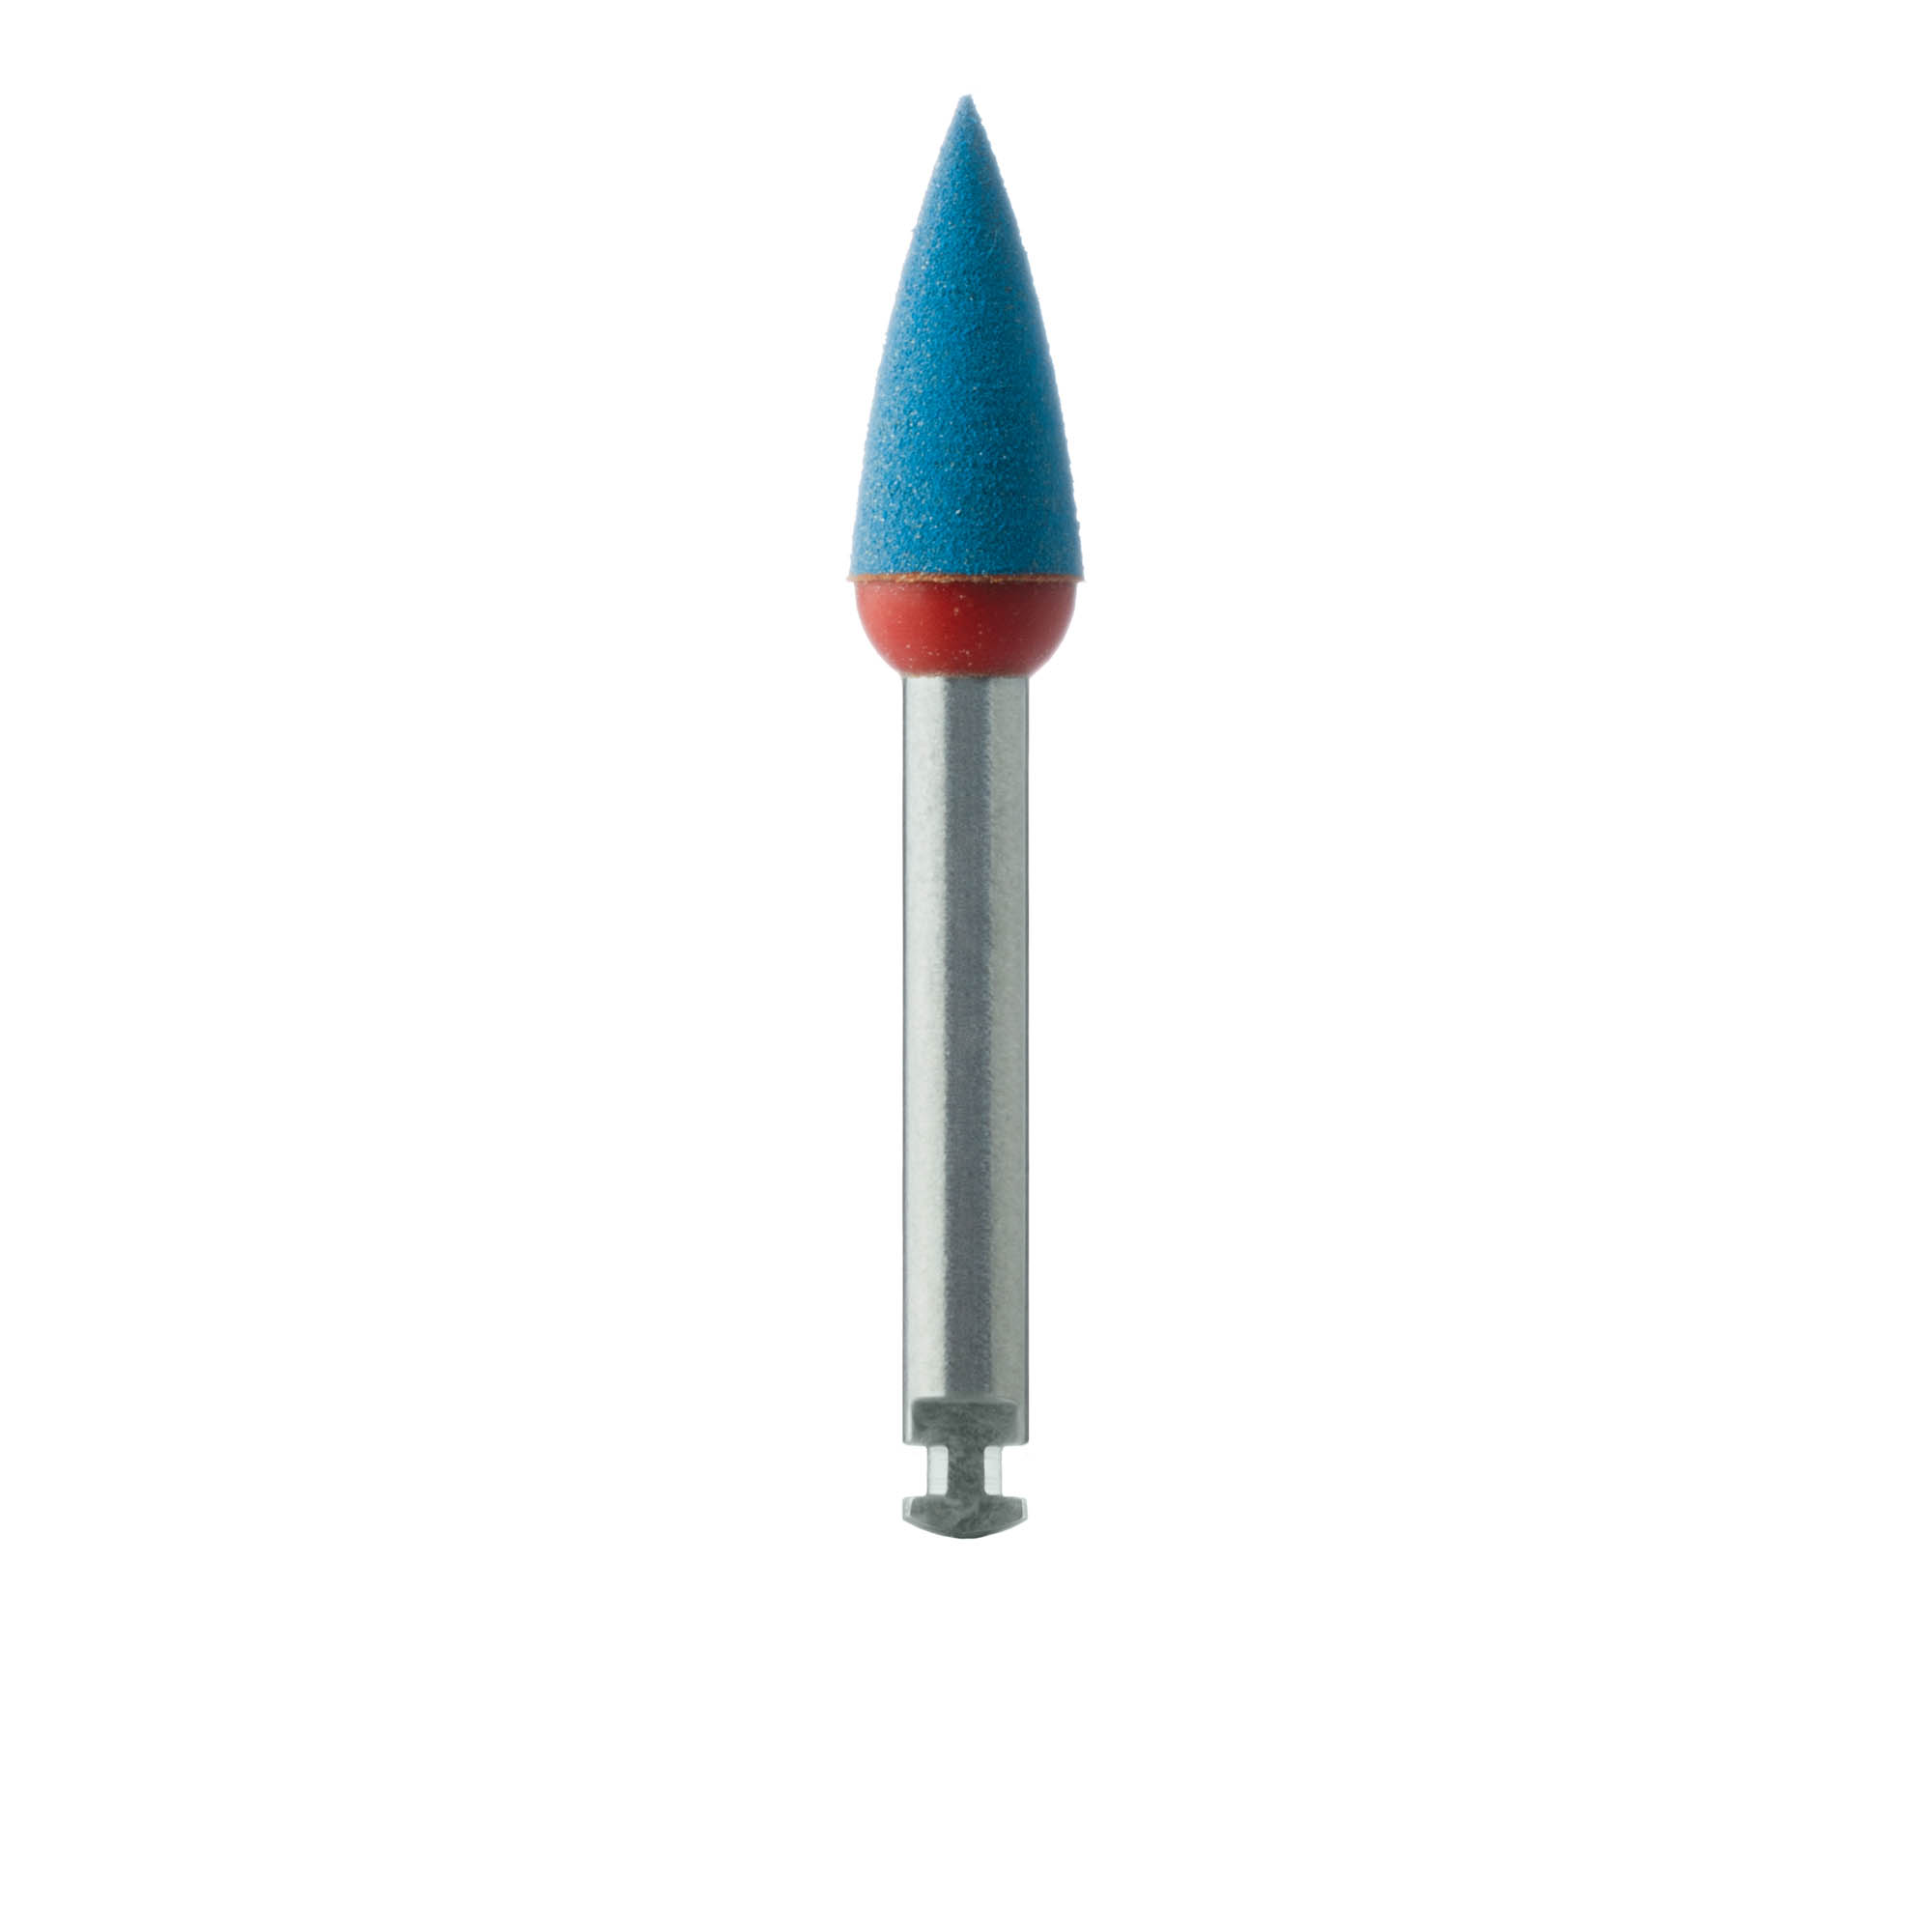 DCA04-040-RA-BL / O Polisher, Diamond Impregnated, For Zirconia, Blue / Orange, Point, 4mm Ø, Smoothing / Pre-Polishing, RA